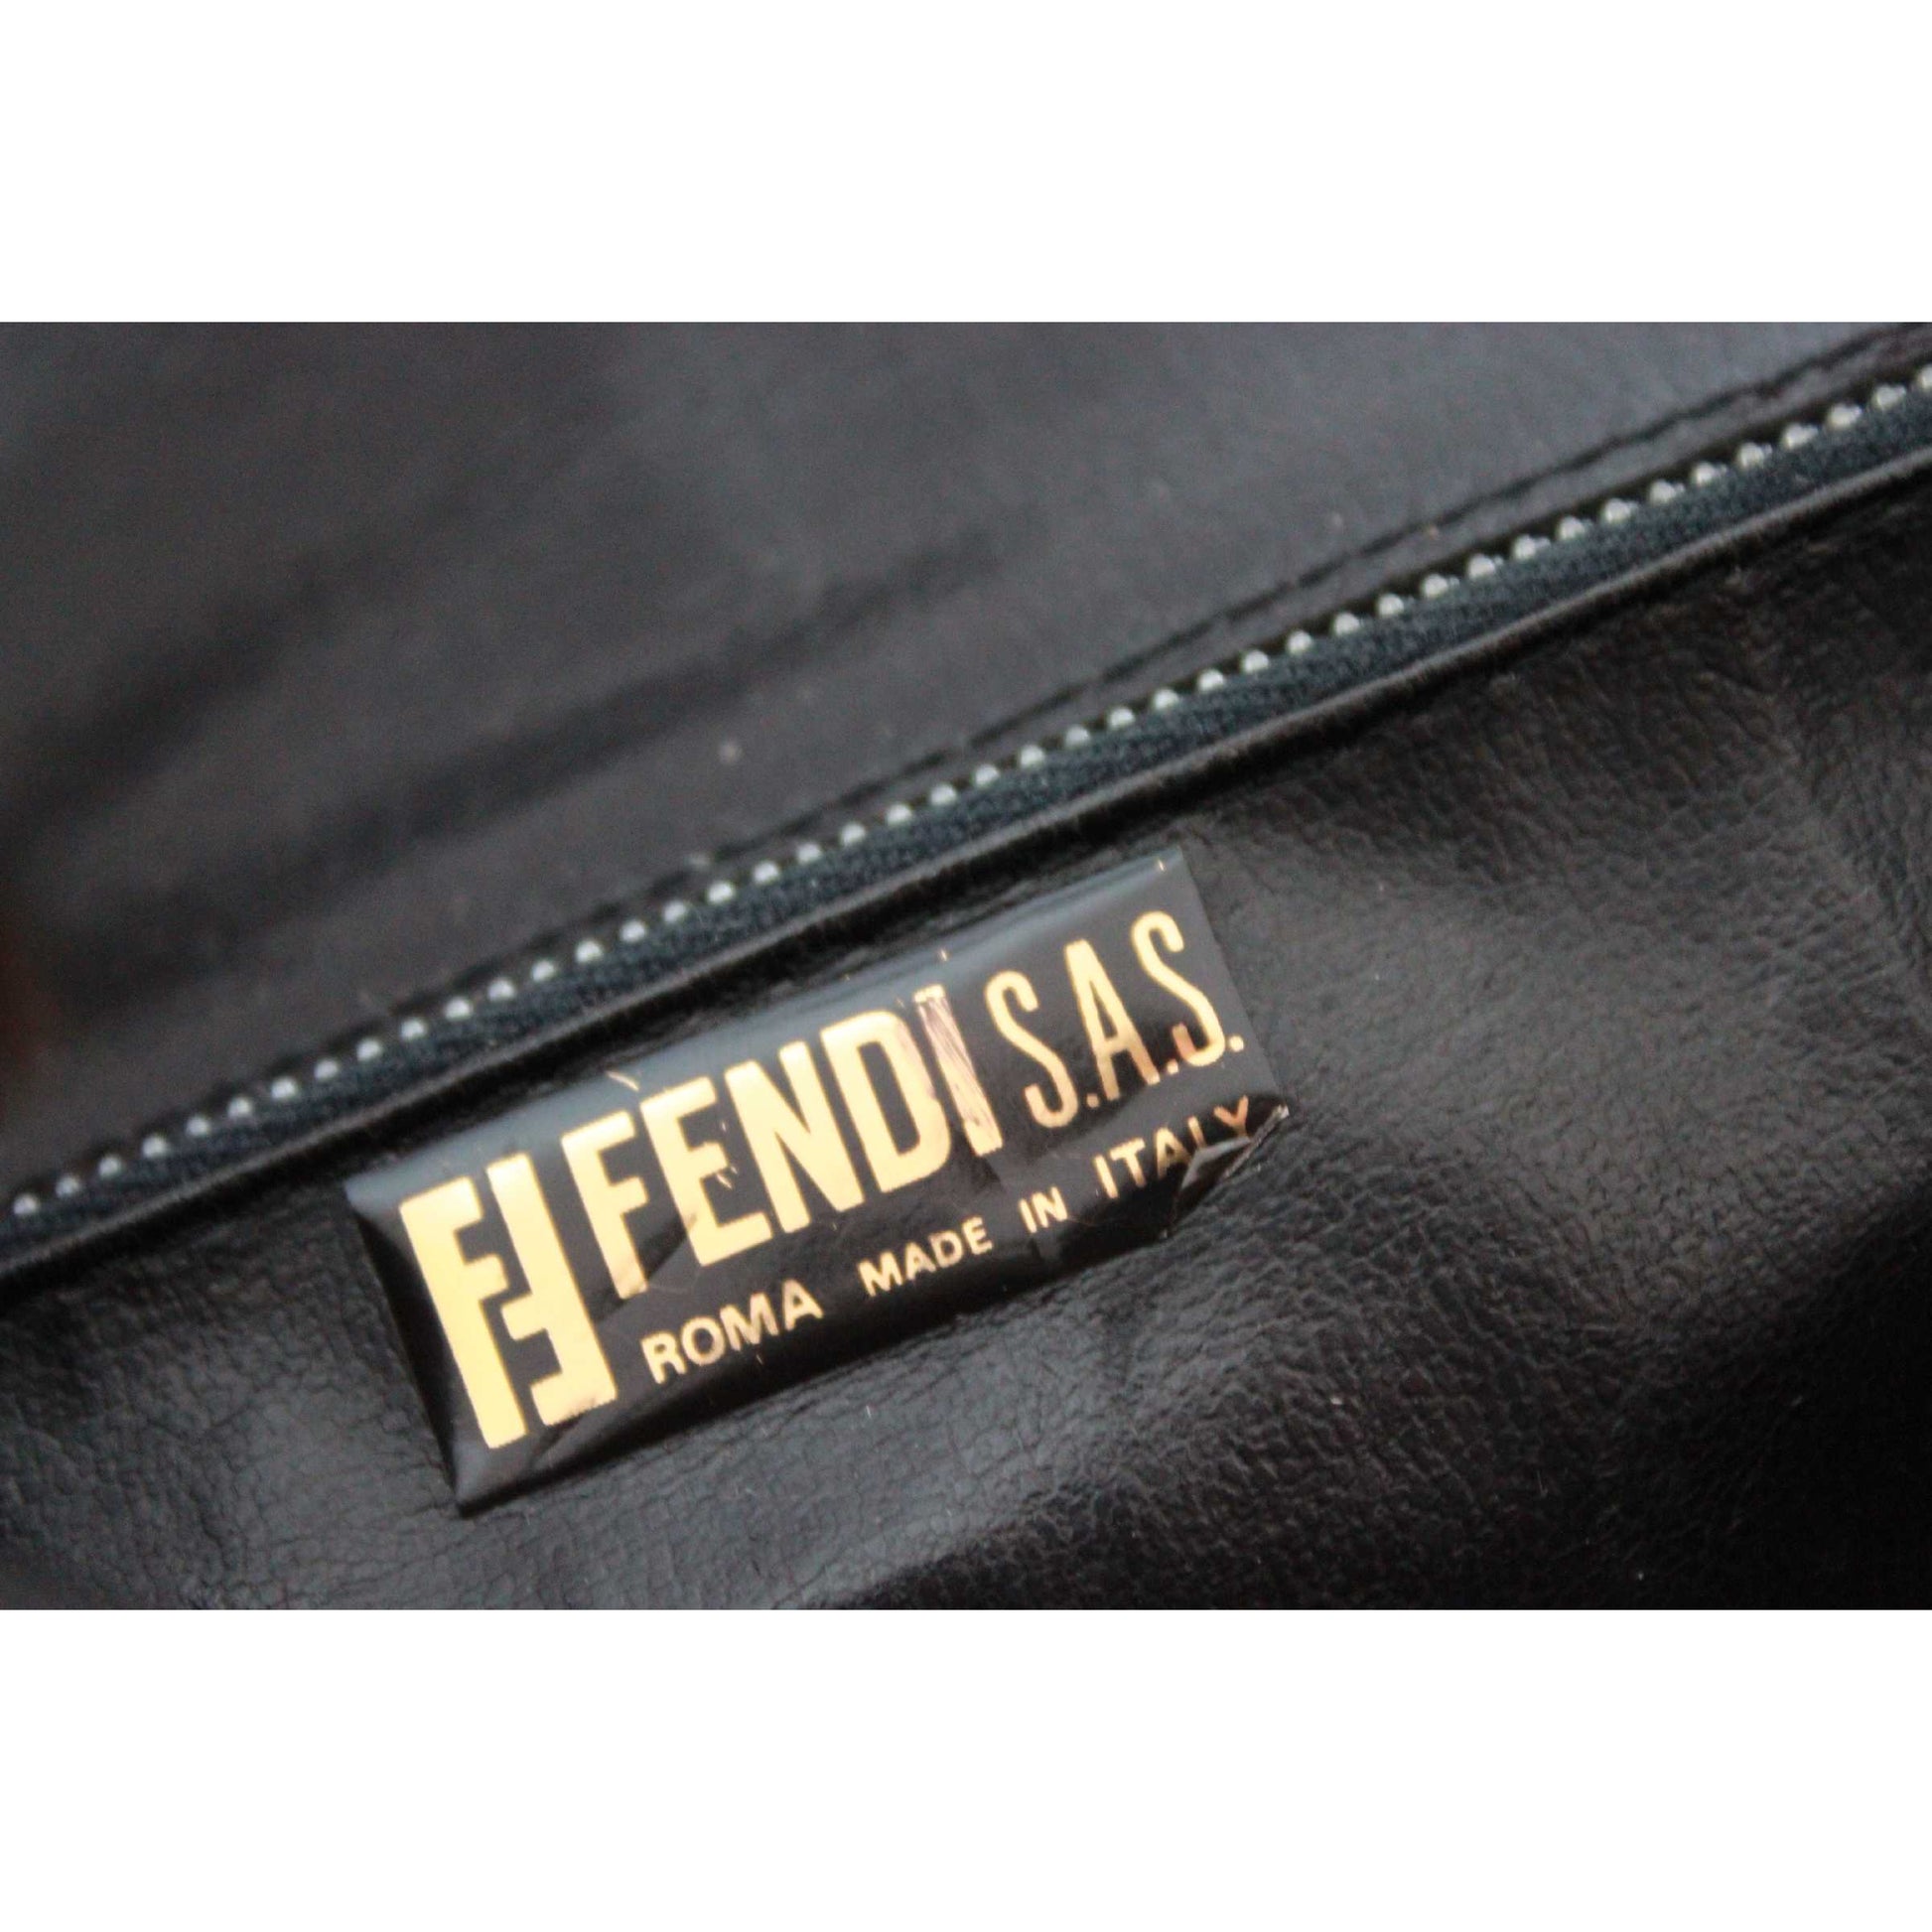 Vintage FENDI genuine black leather kelly style shoulder bag with croc –  eNdApPi ***where you can find your favorite designer  vintages..authentic, affordable, and lovable.